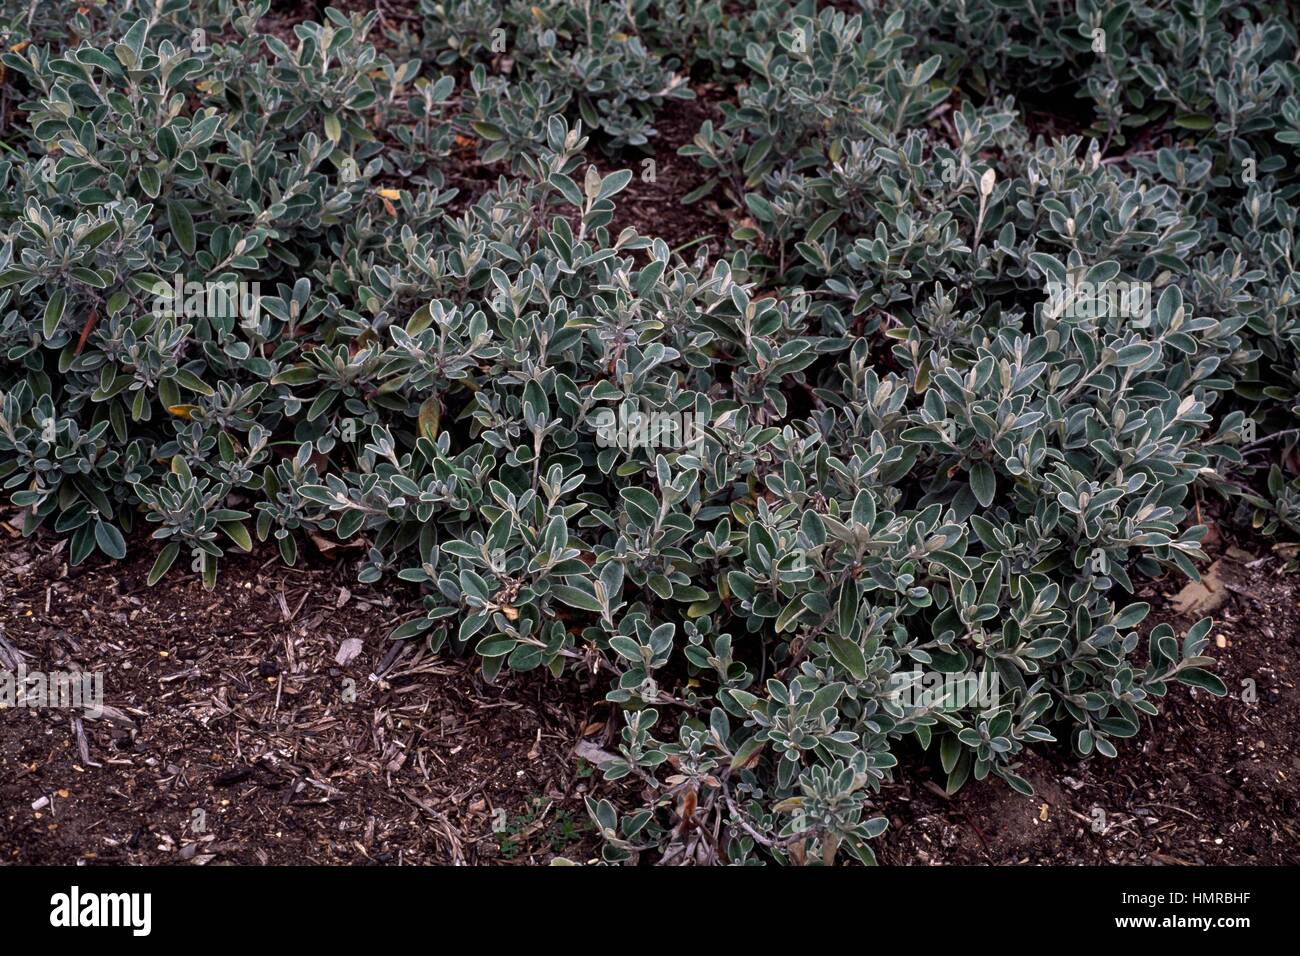 Daisy Bush (Brachyglottis greyi or Senecio greyi), Asteraceae. Stock Photo